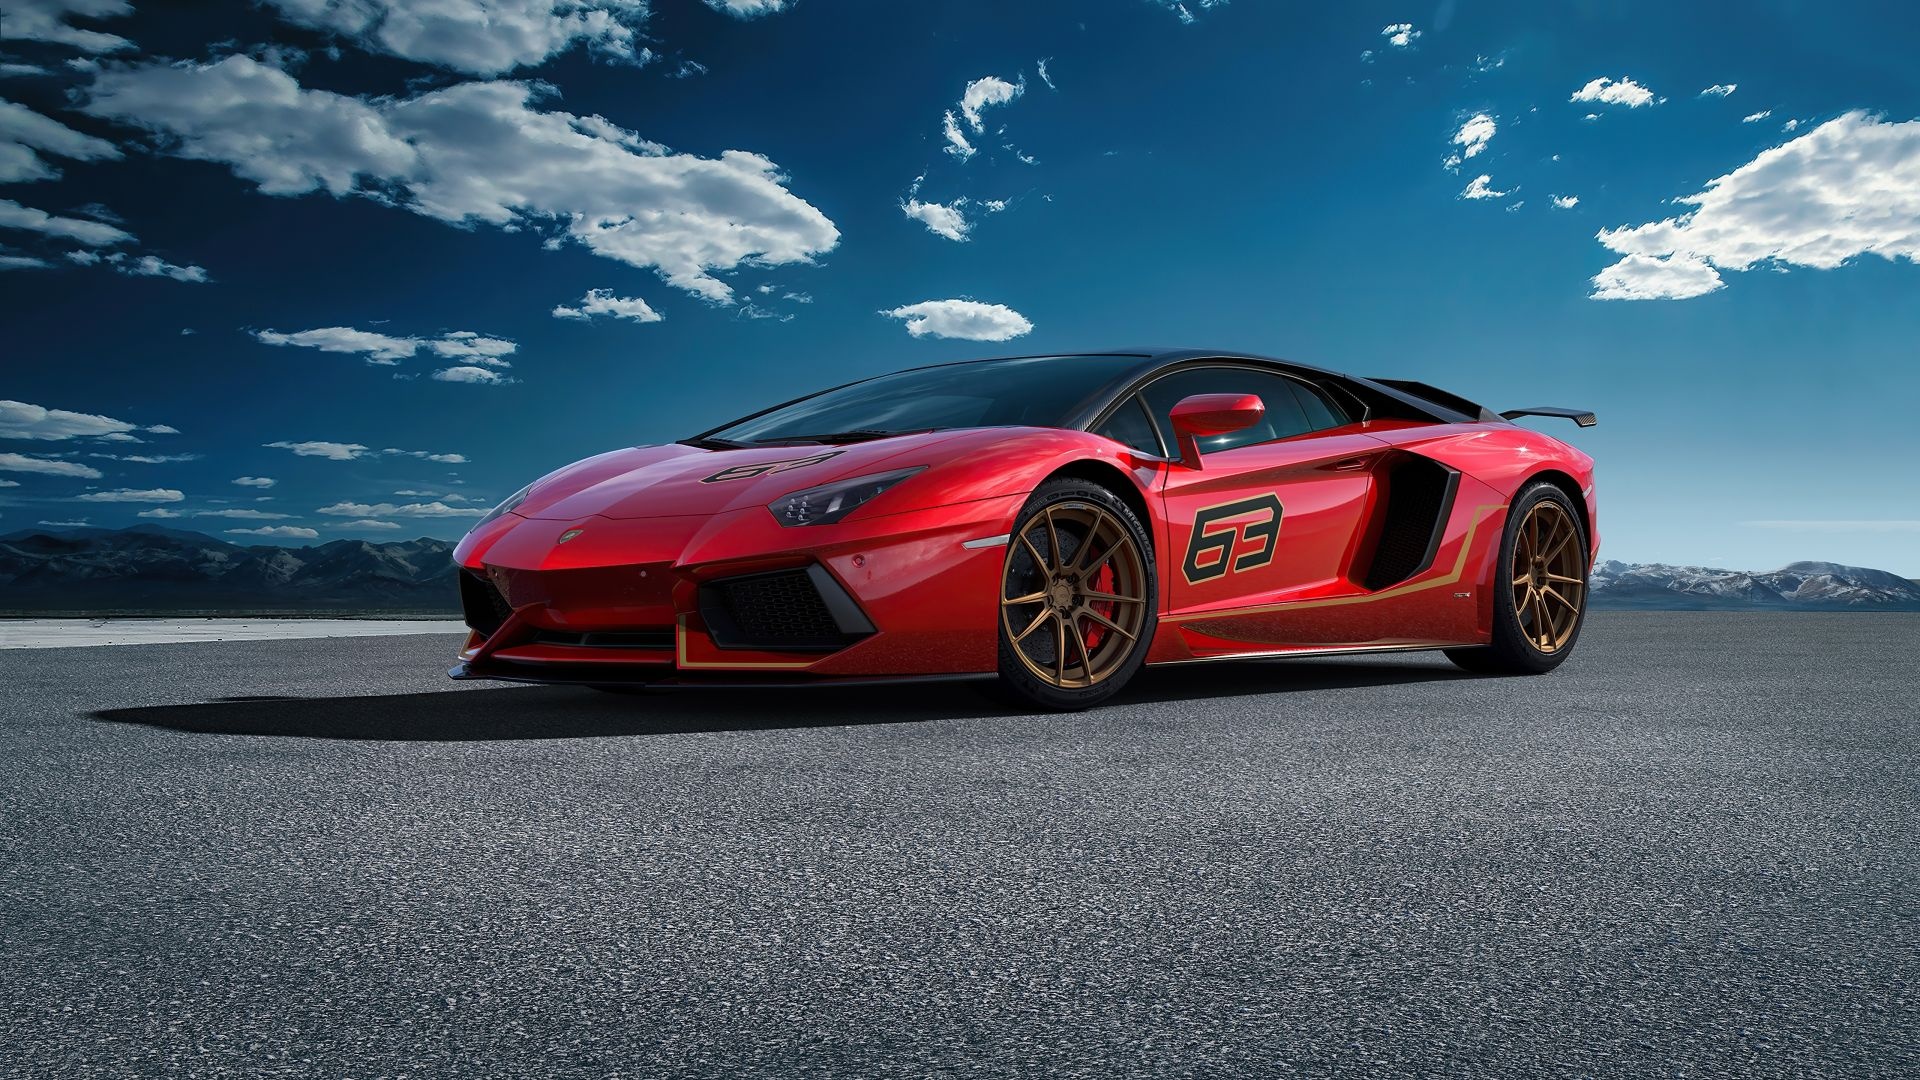 Lamborghini Aventador, Red car off-road marvel, Wallpaper HD image, Purple background, 1920x1080 Full HD Desktop